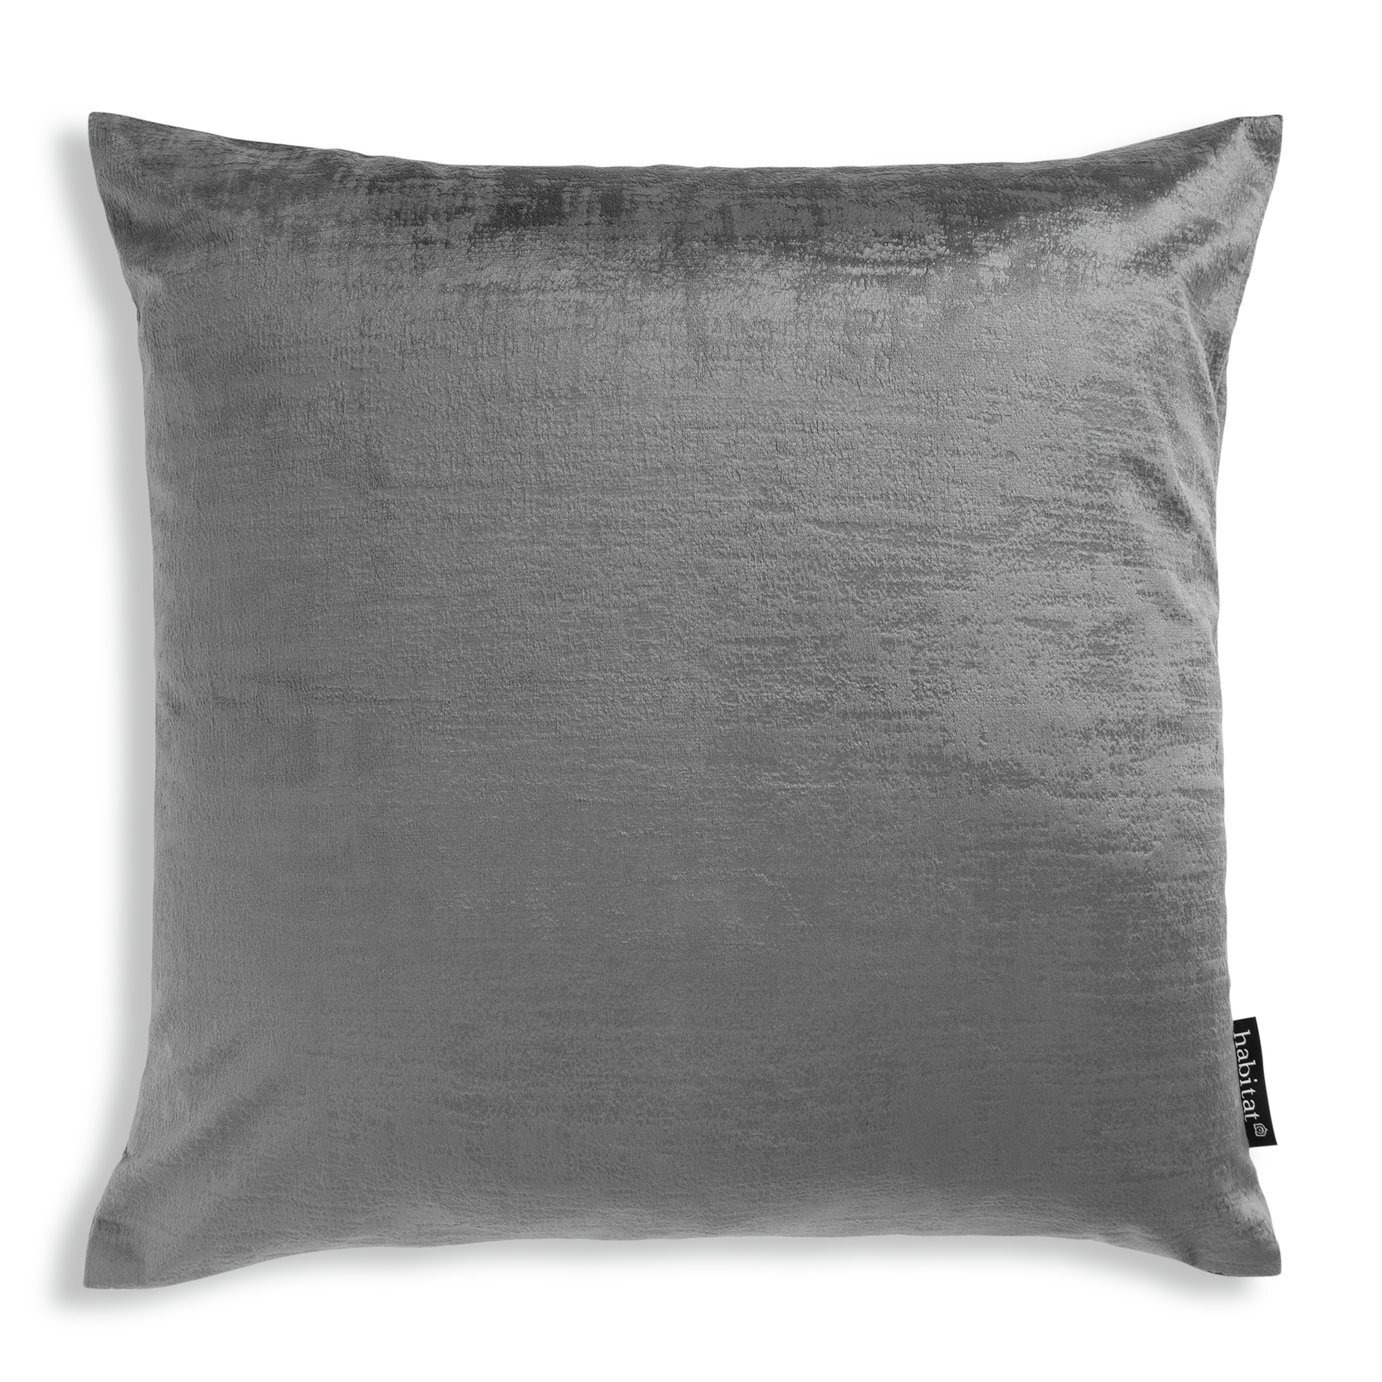 Habitat Textured Velvet Cushion Cover - Grey - 43X43cm - image 1